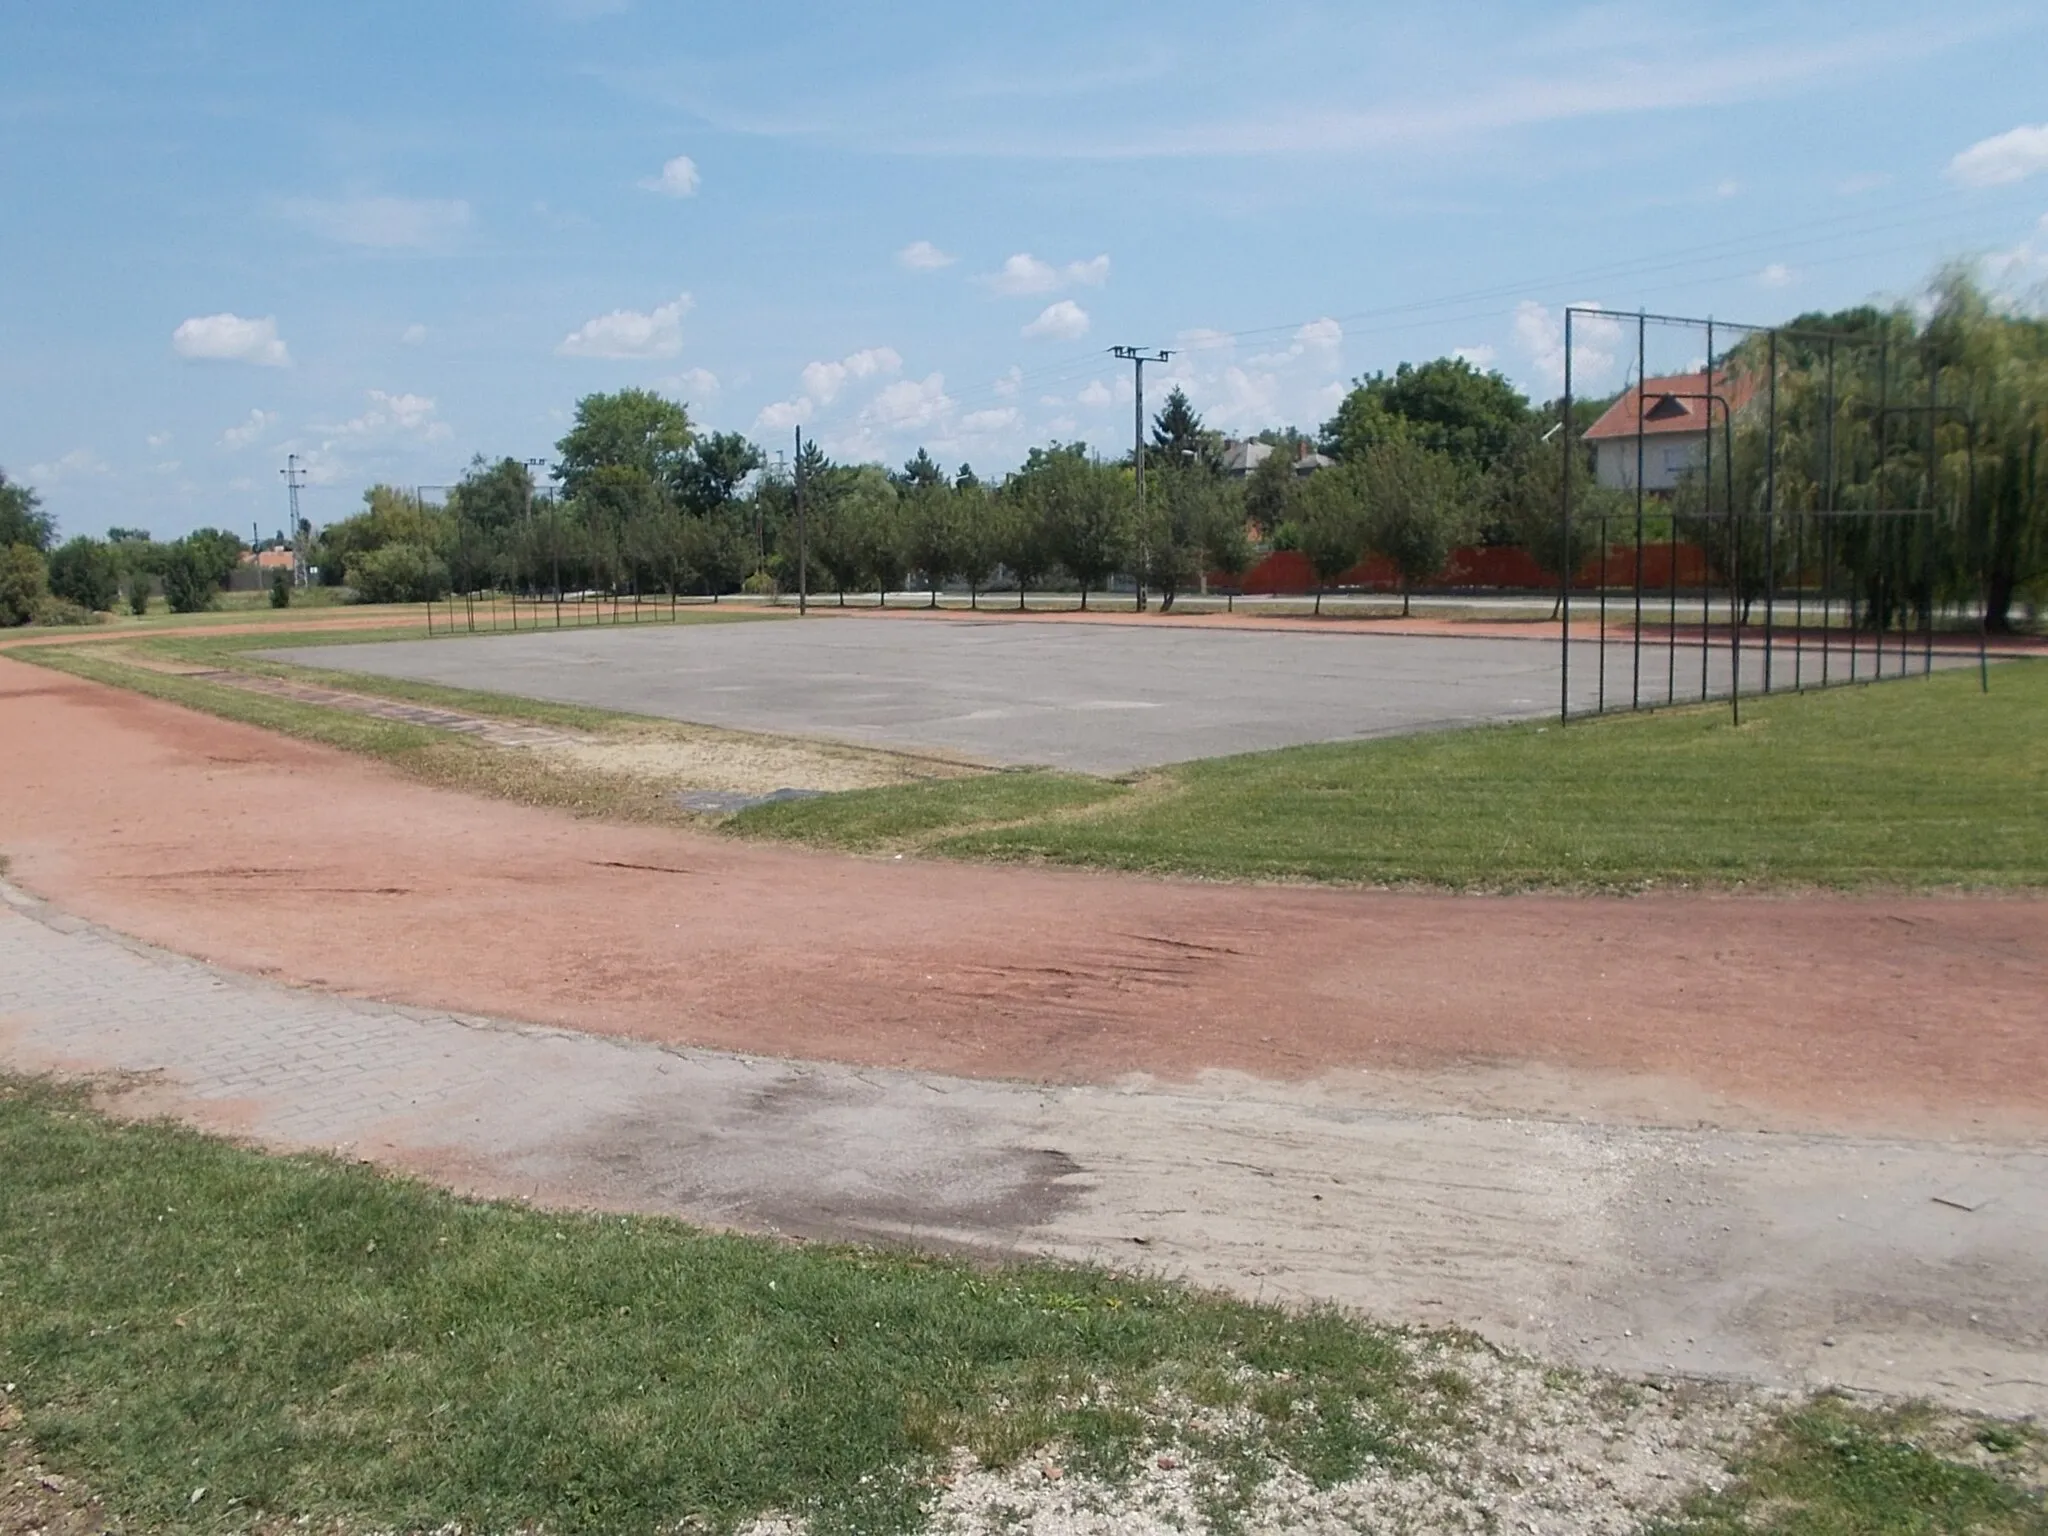 Photo showing: : School/public sports grounds over the covered Bak-ér stgream - Kunszentmiklós, Bács-Kiskun County, Hungary.